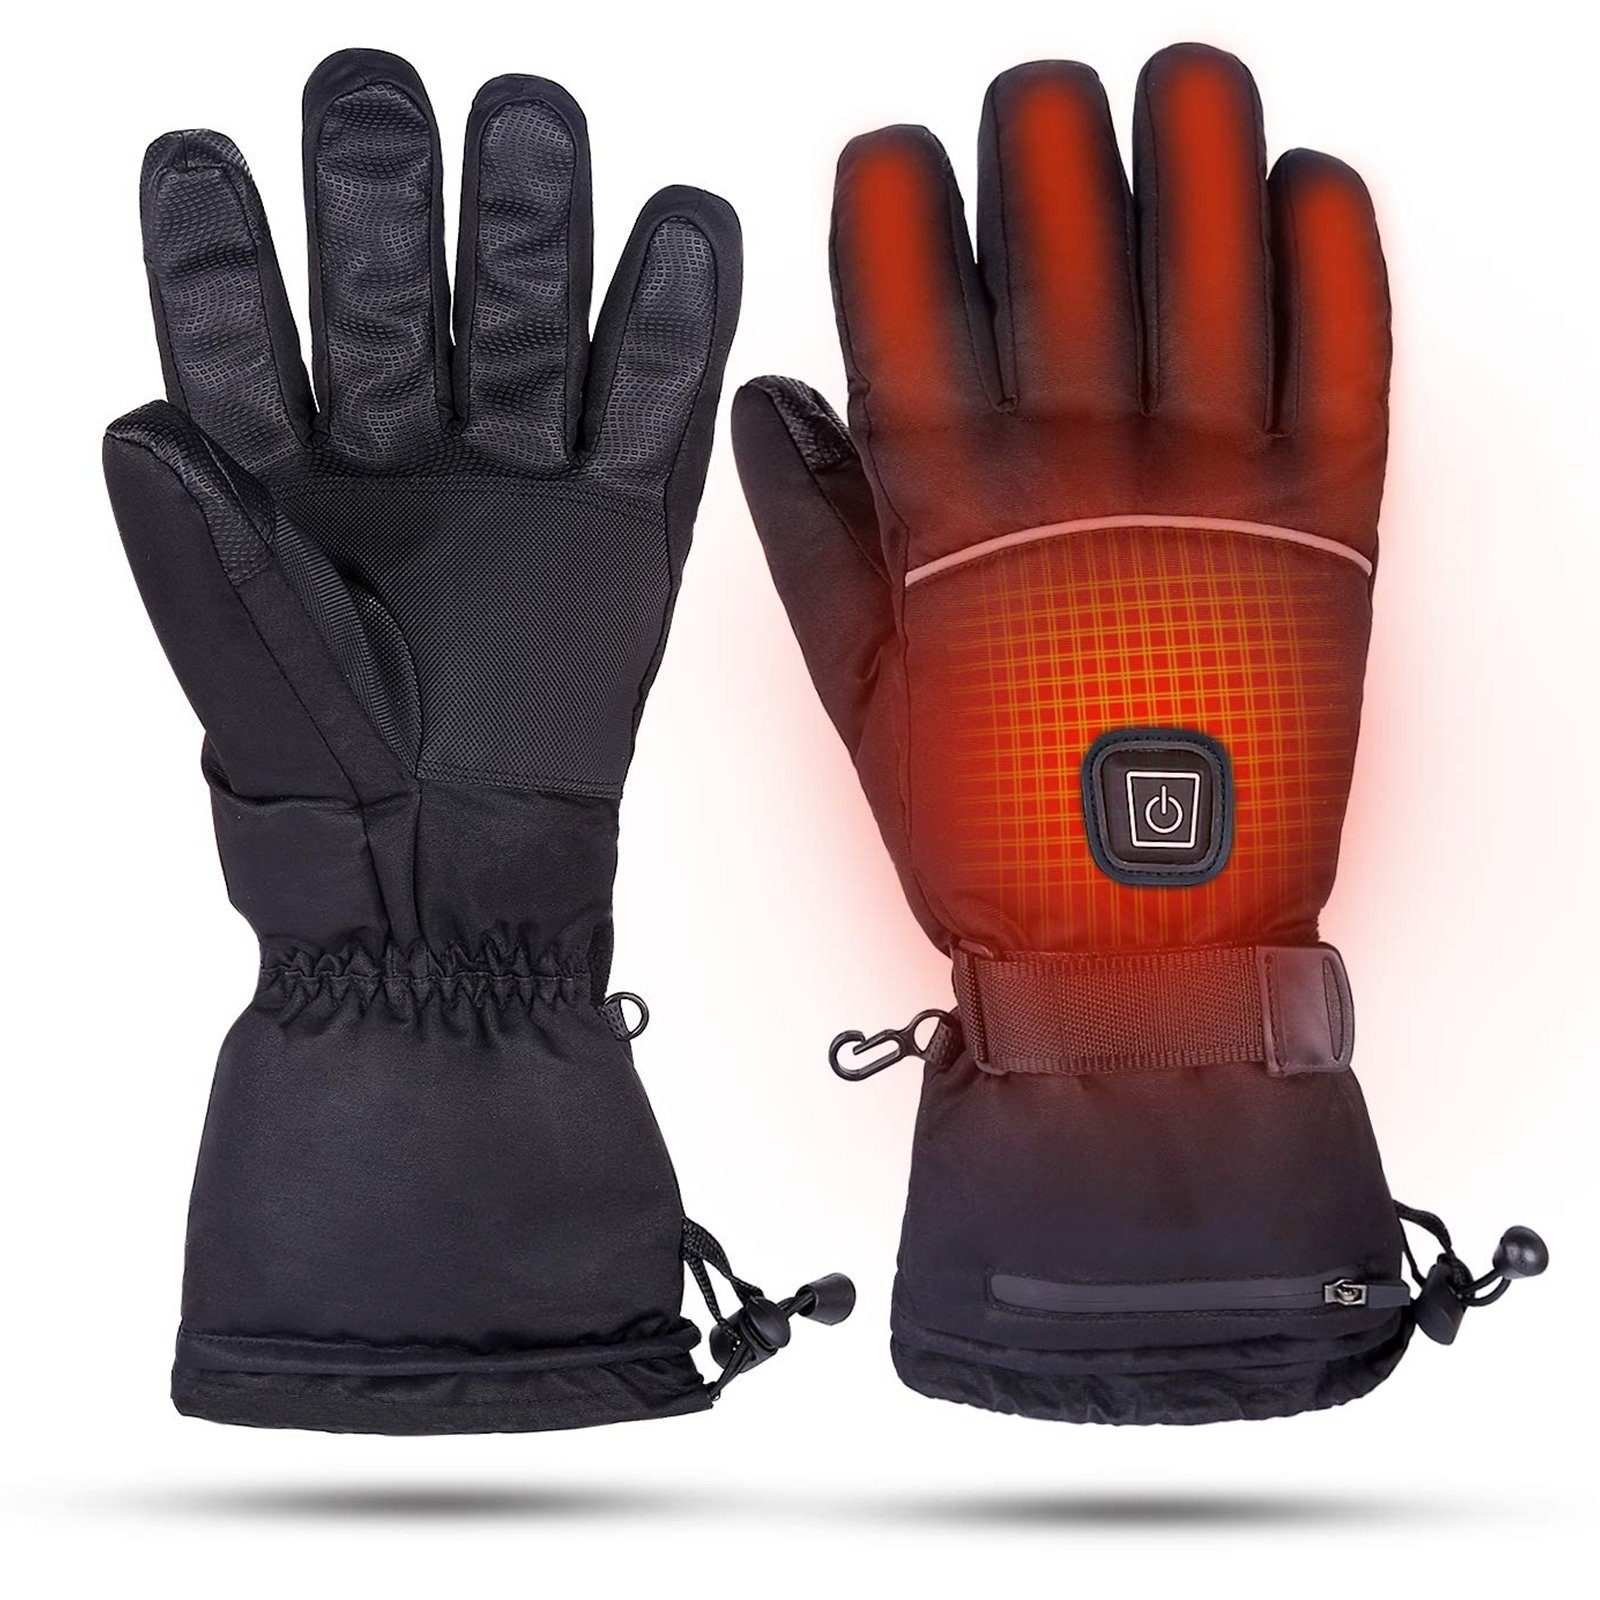 Rosnek Elektriker-Handschuhe Beheizt, 3 Stufen, wasserdicht, für Jagd Wandern Ski Winterarbeit (1 Paar) Touchscreen, Batterie | Handschuhe